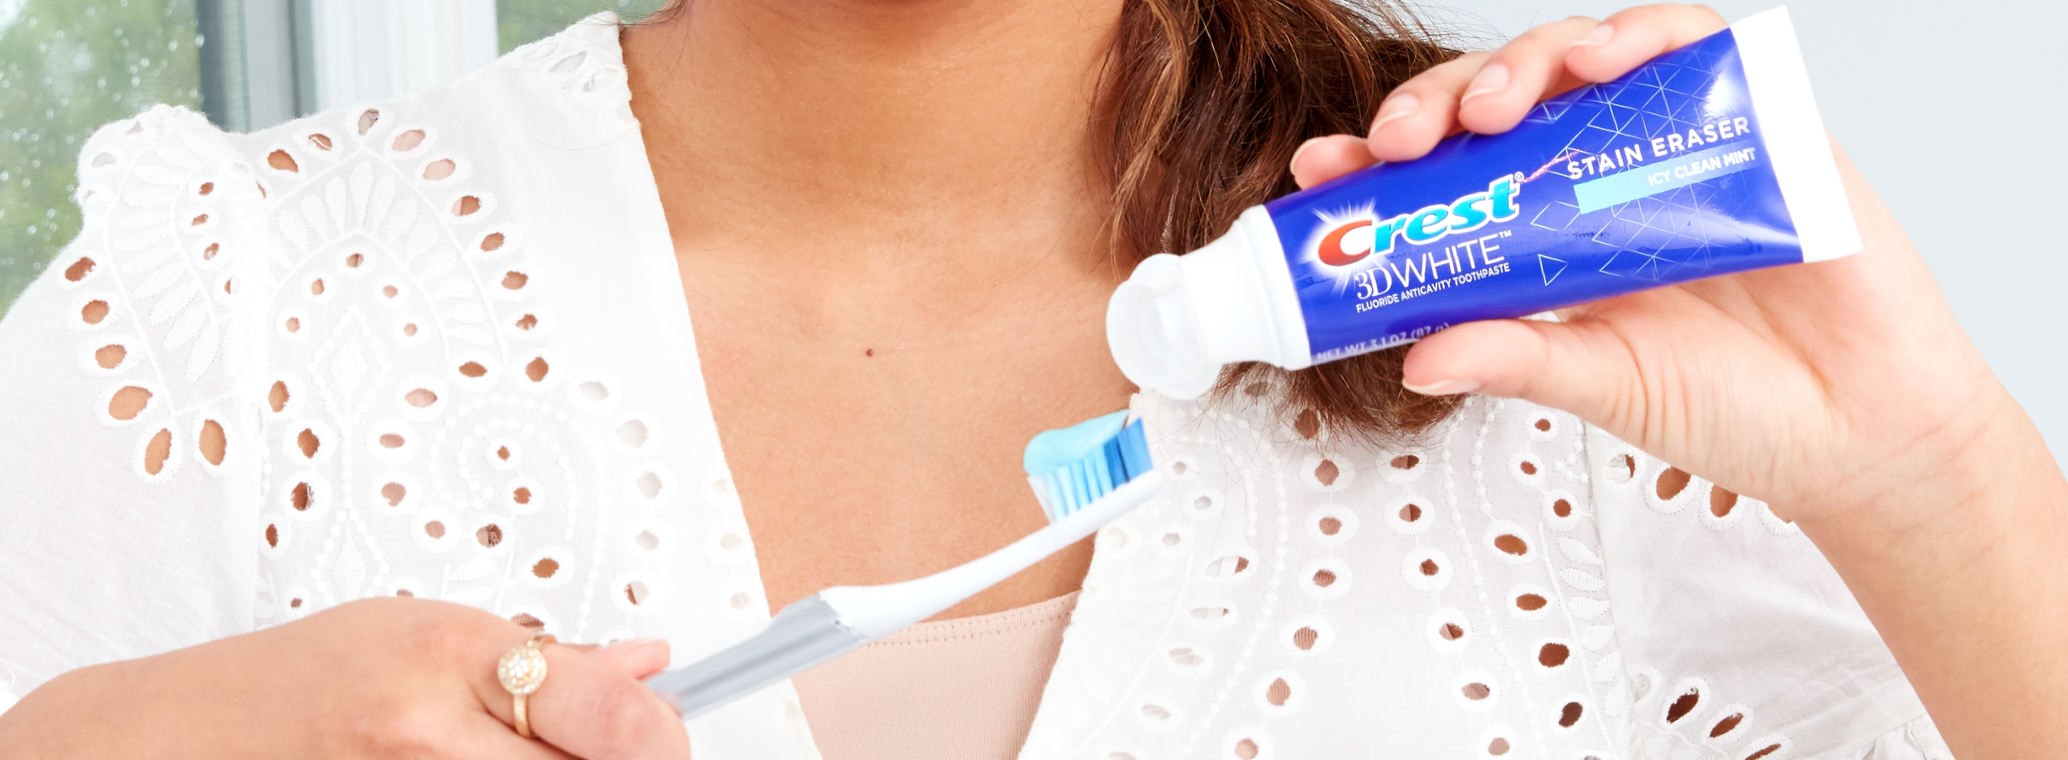 Carrageenan in Toothpaste